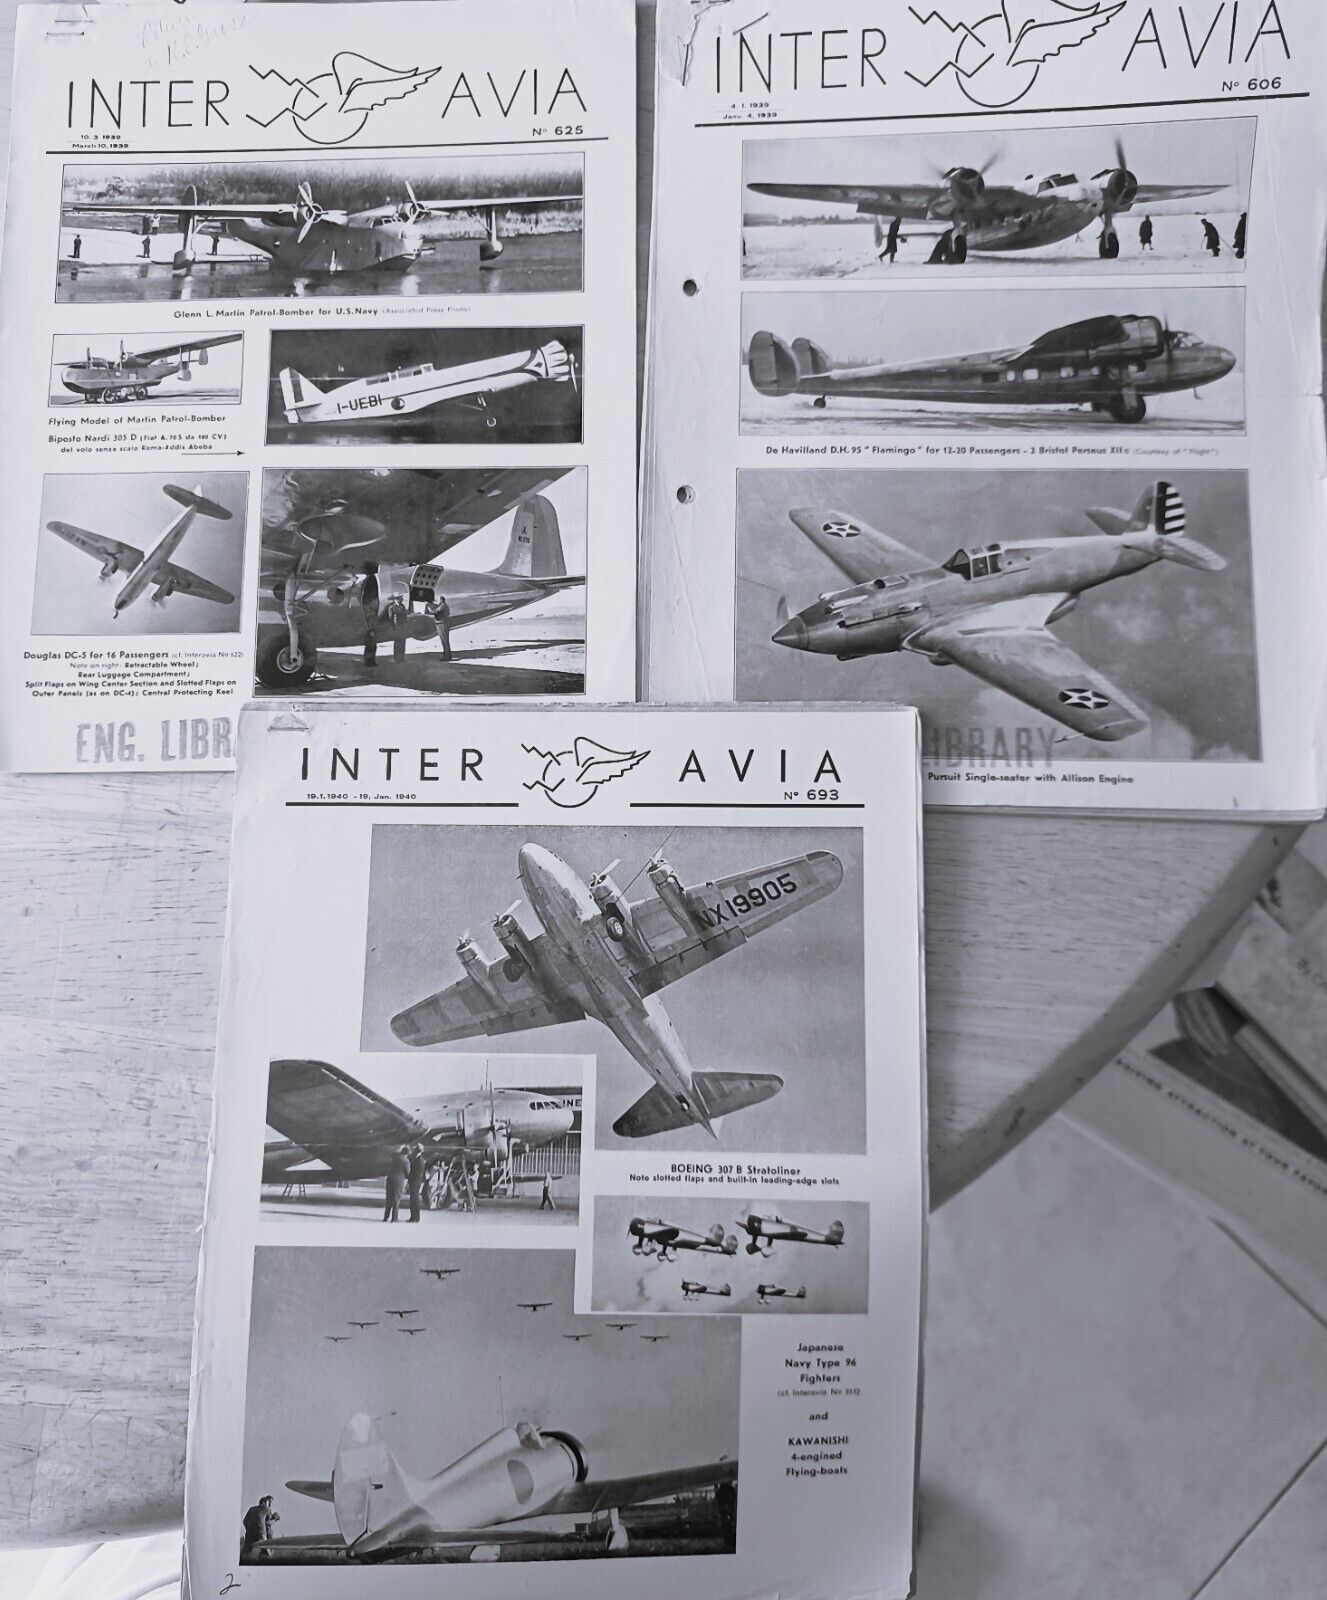 INTERAVIA, 3 Issues Jan + Mar 1939, January 1940, International Aviation